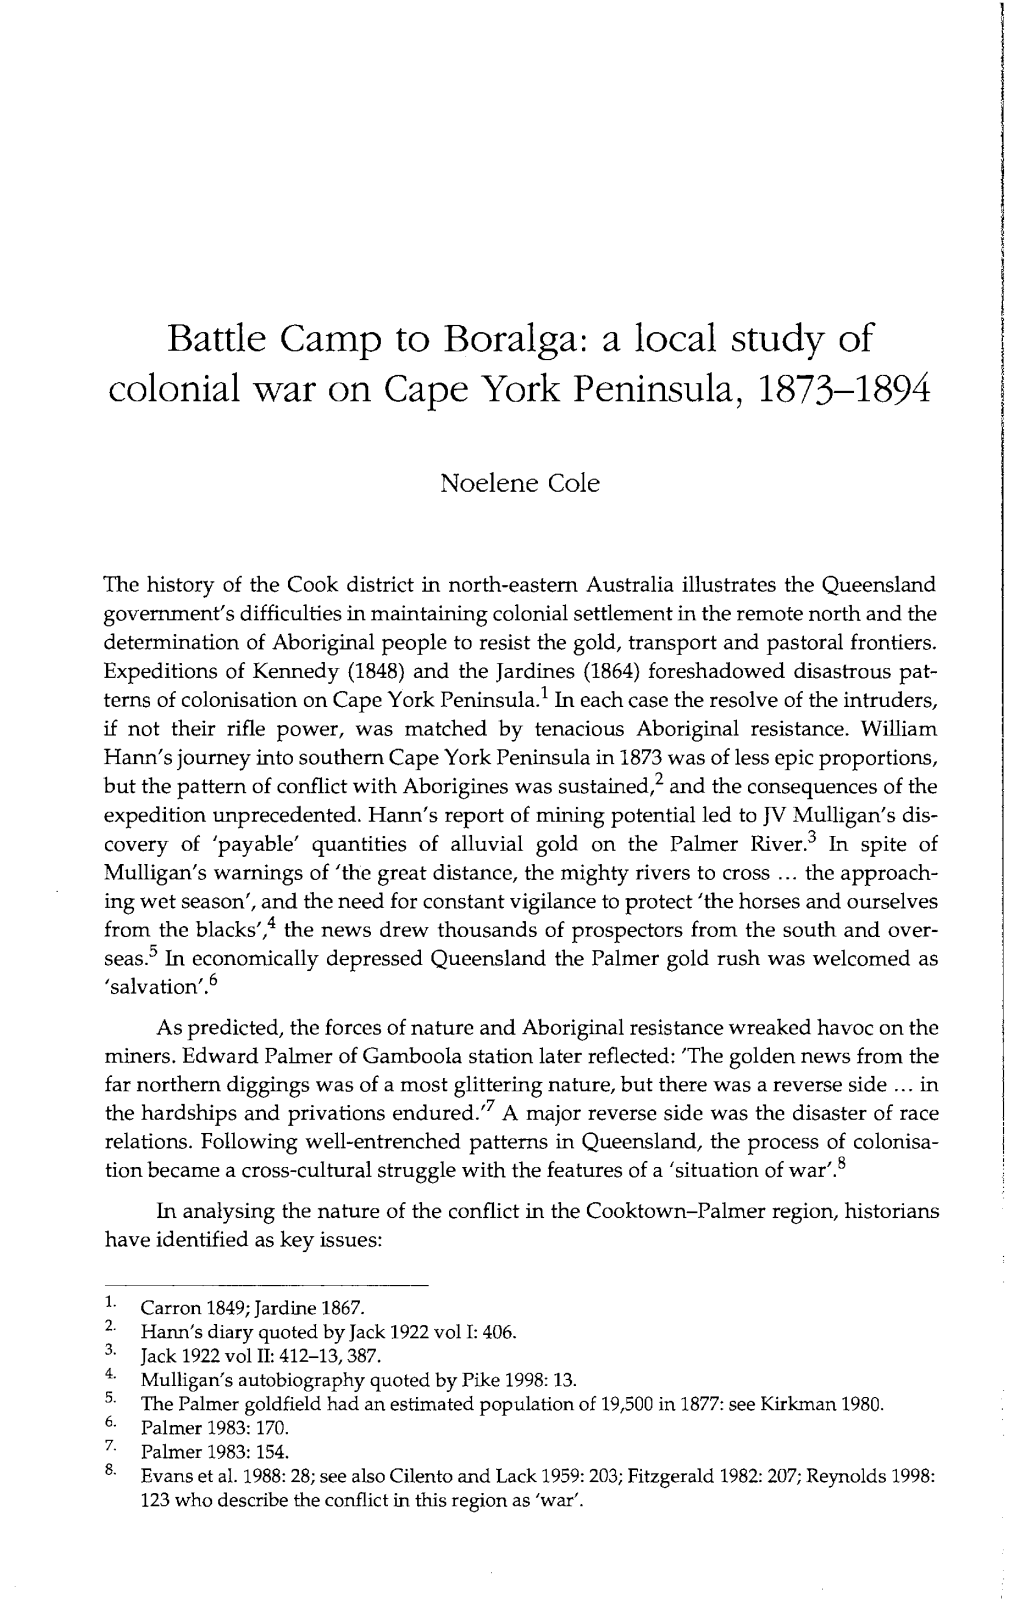 Battle Camp to Boralga: a Local Study of Colonial War on Cape York Peninsula, 1873-1894